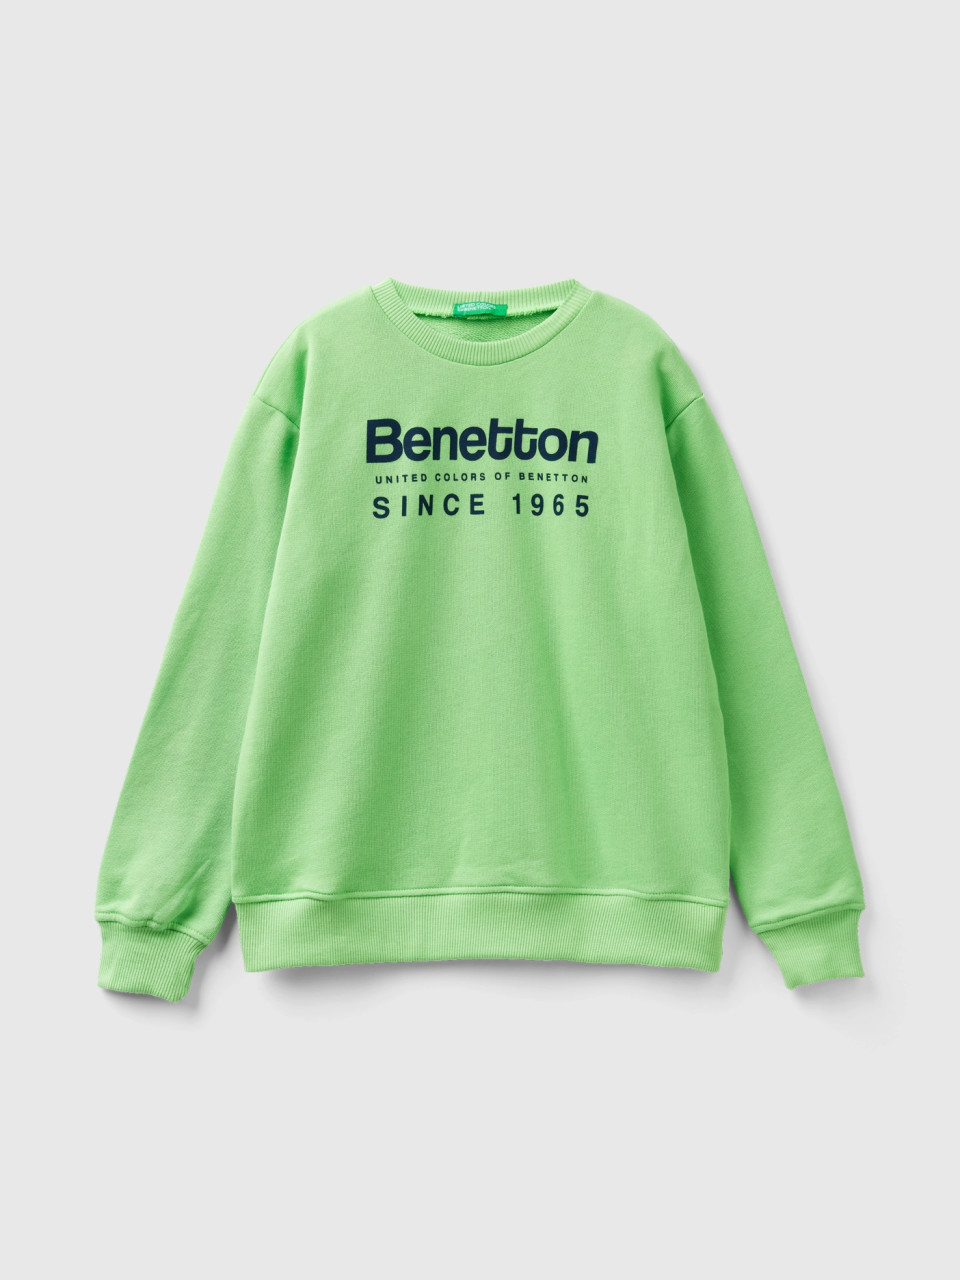 Benetton, Sweatshirt With Logo Print, Light Green, Kids